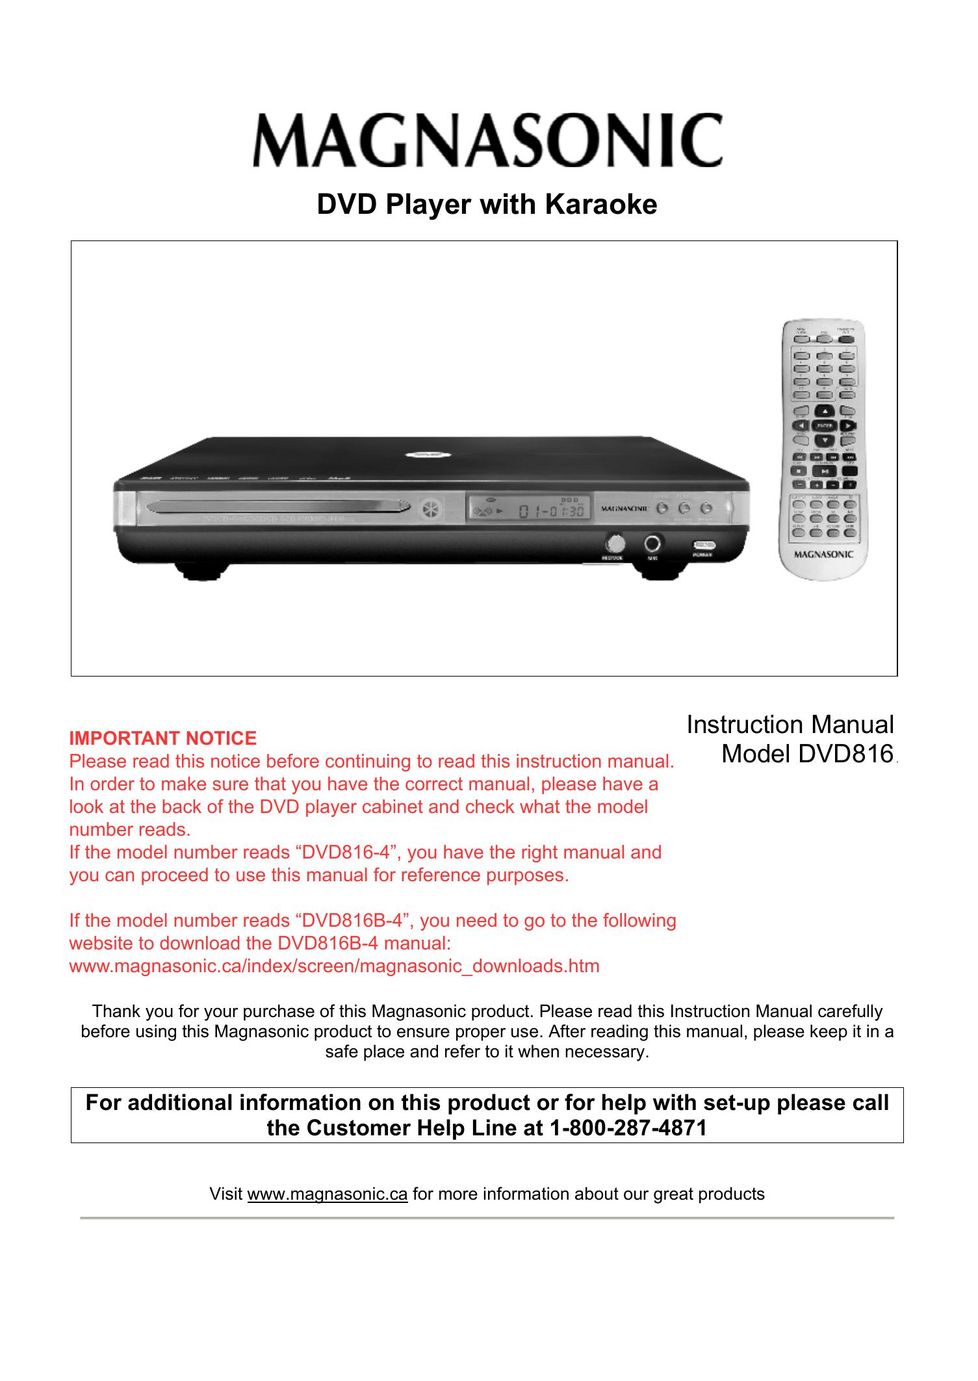 Magnasonic DVD816 DVD Player User Manual